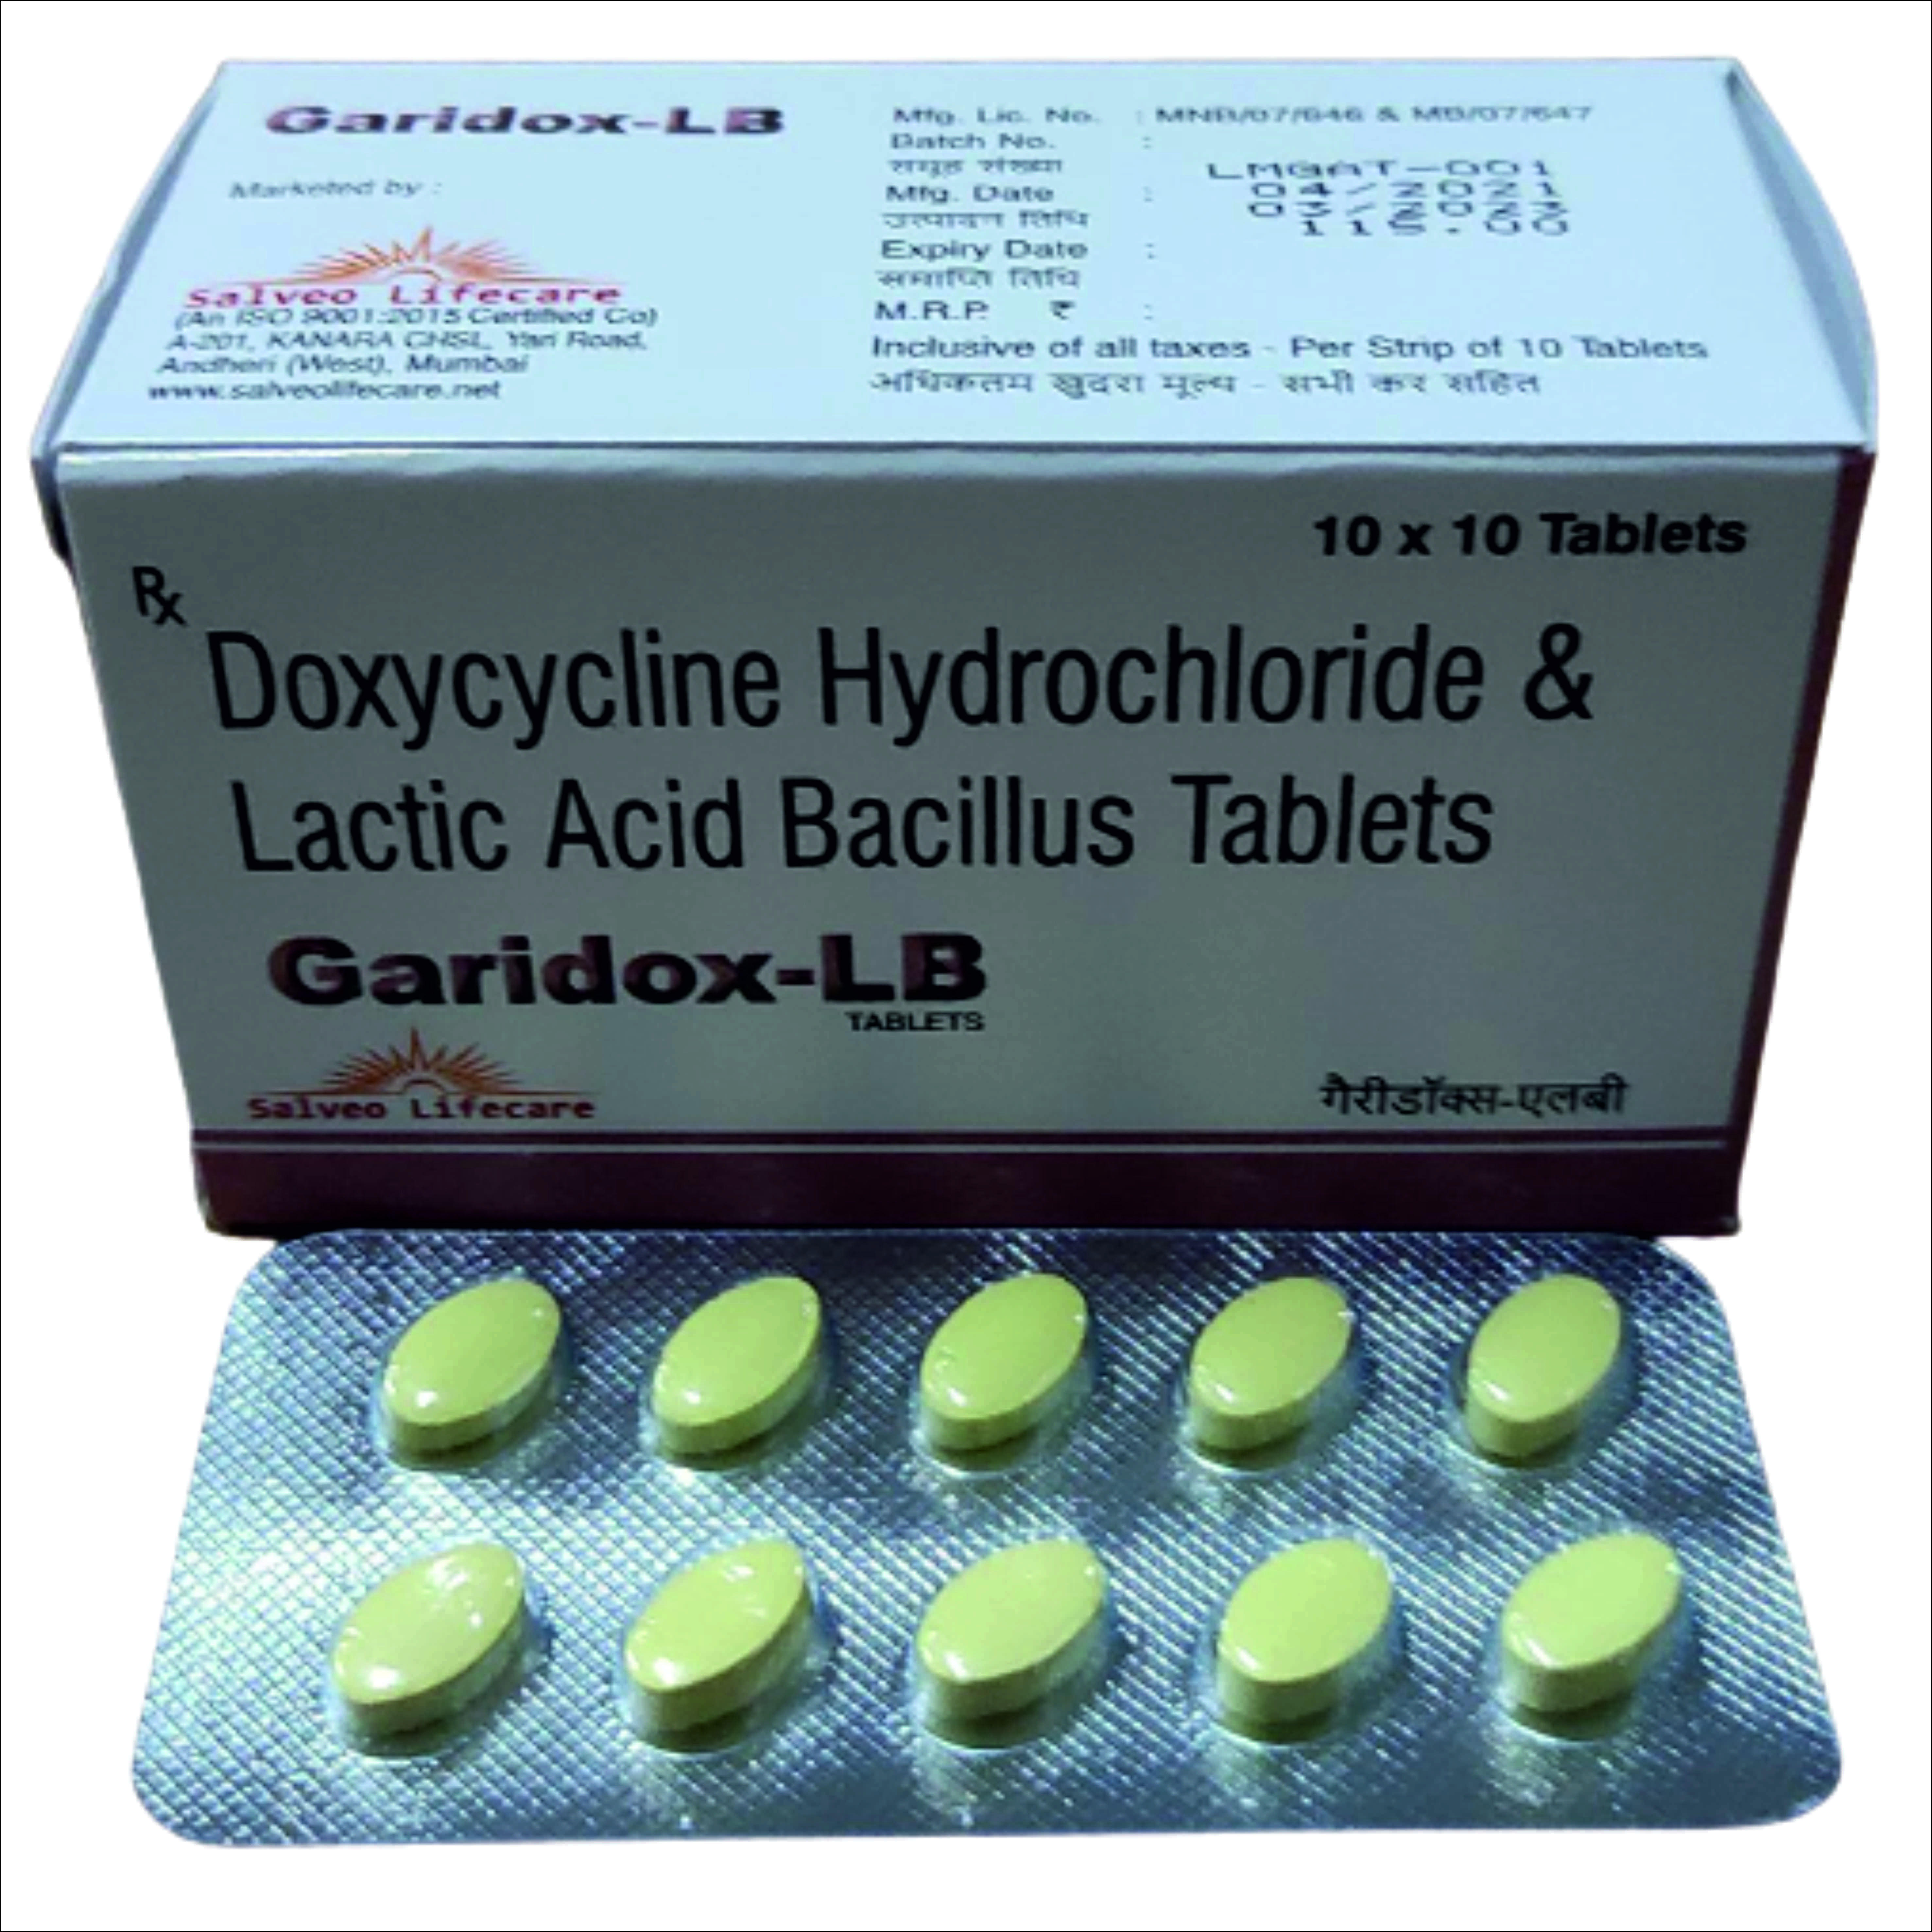 doxycycline hydrochloride 100mg & lactic acid bacillus tablet